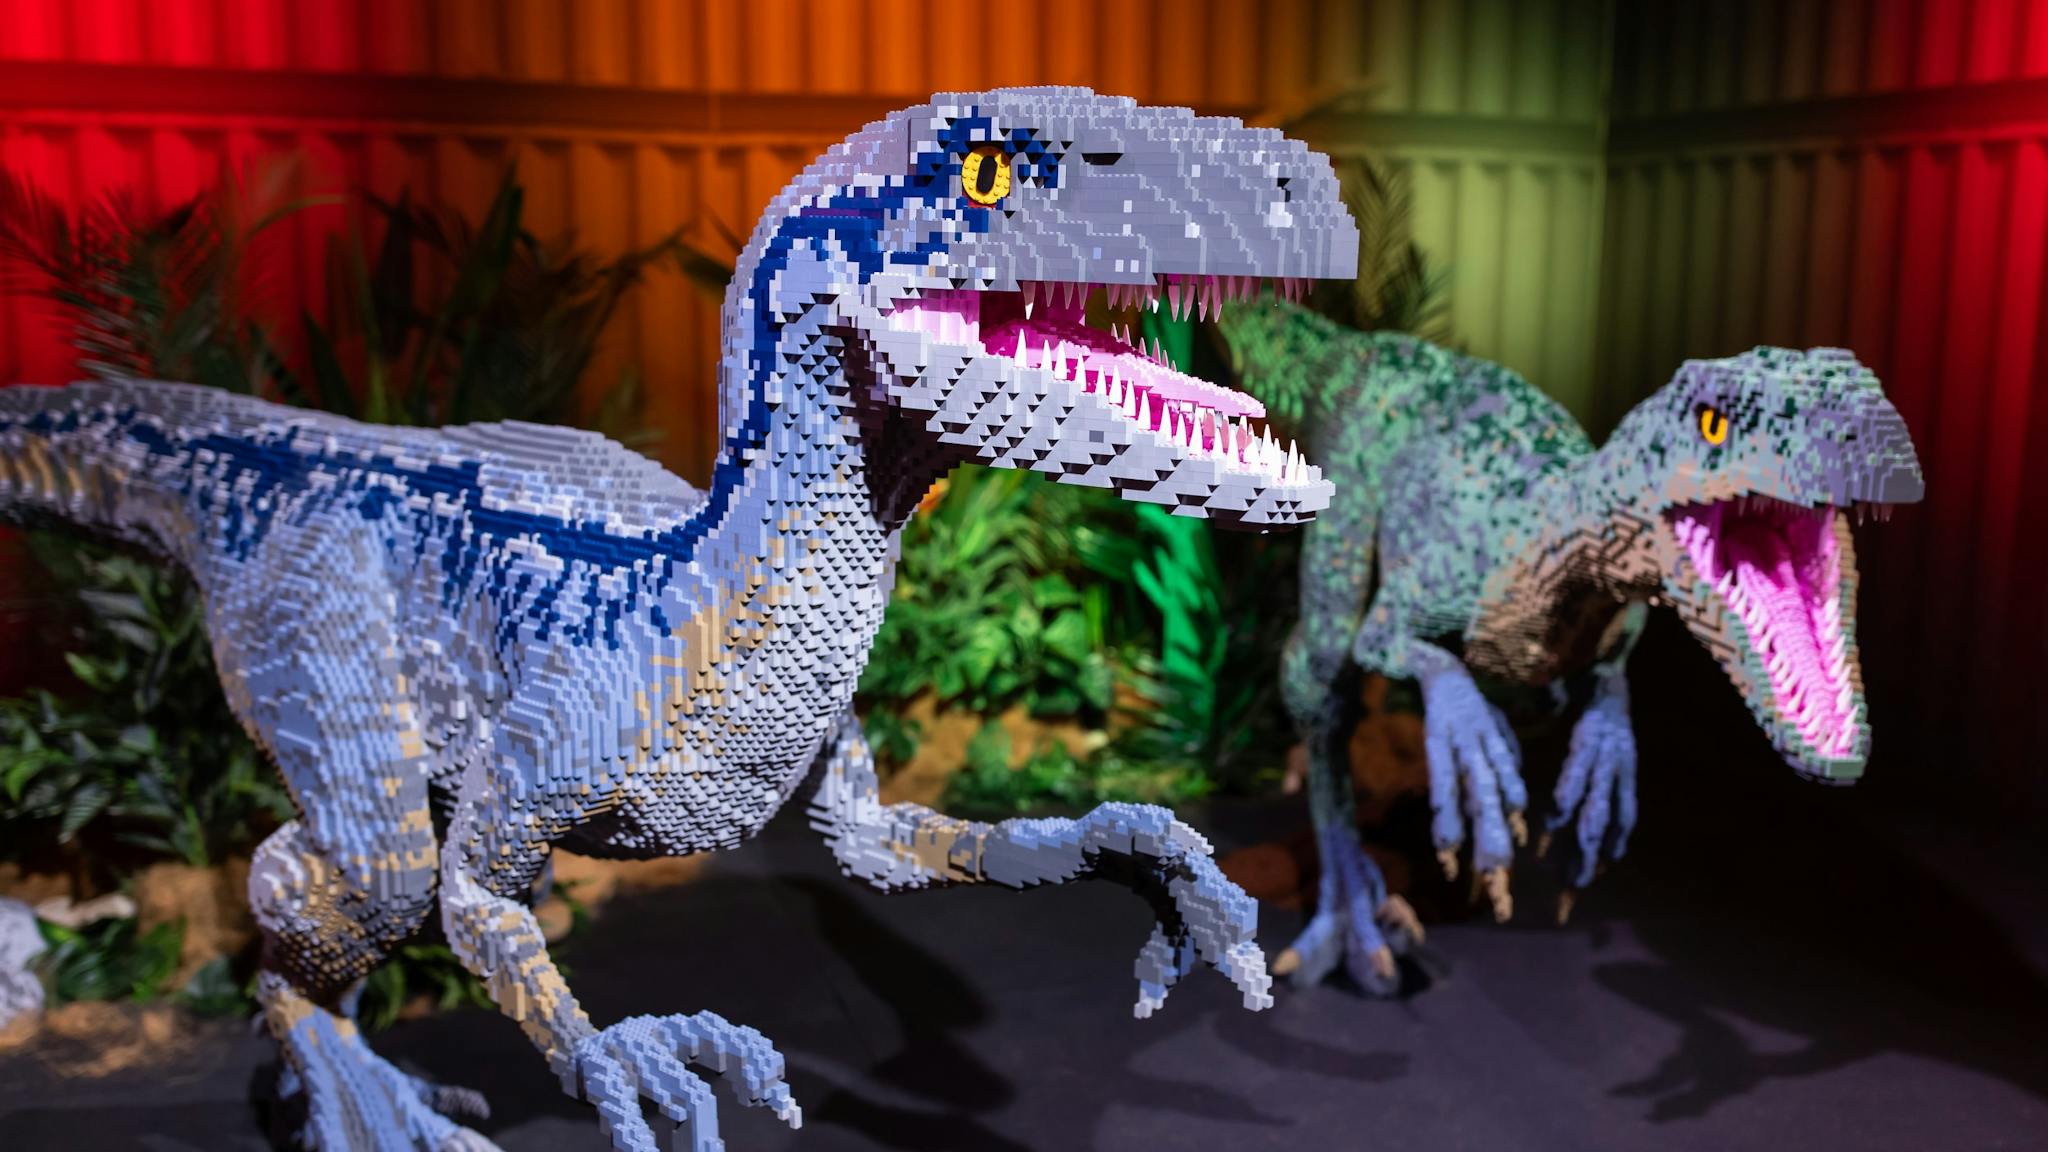 Two velociraptors made of LEGO bricks